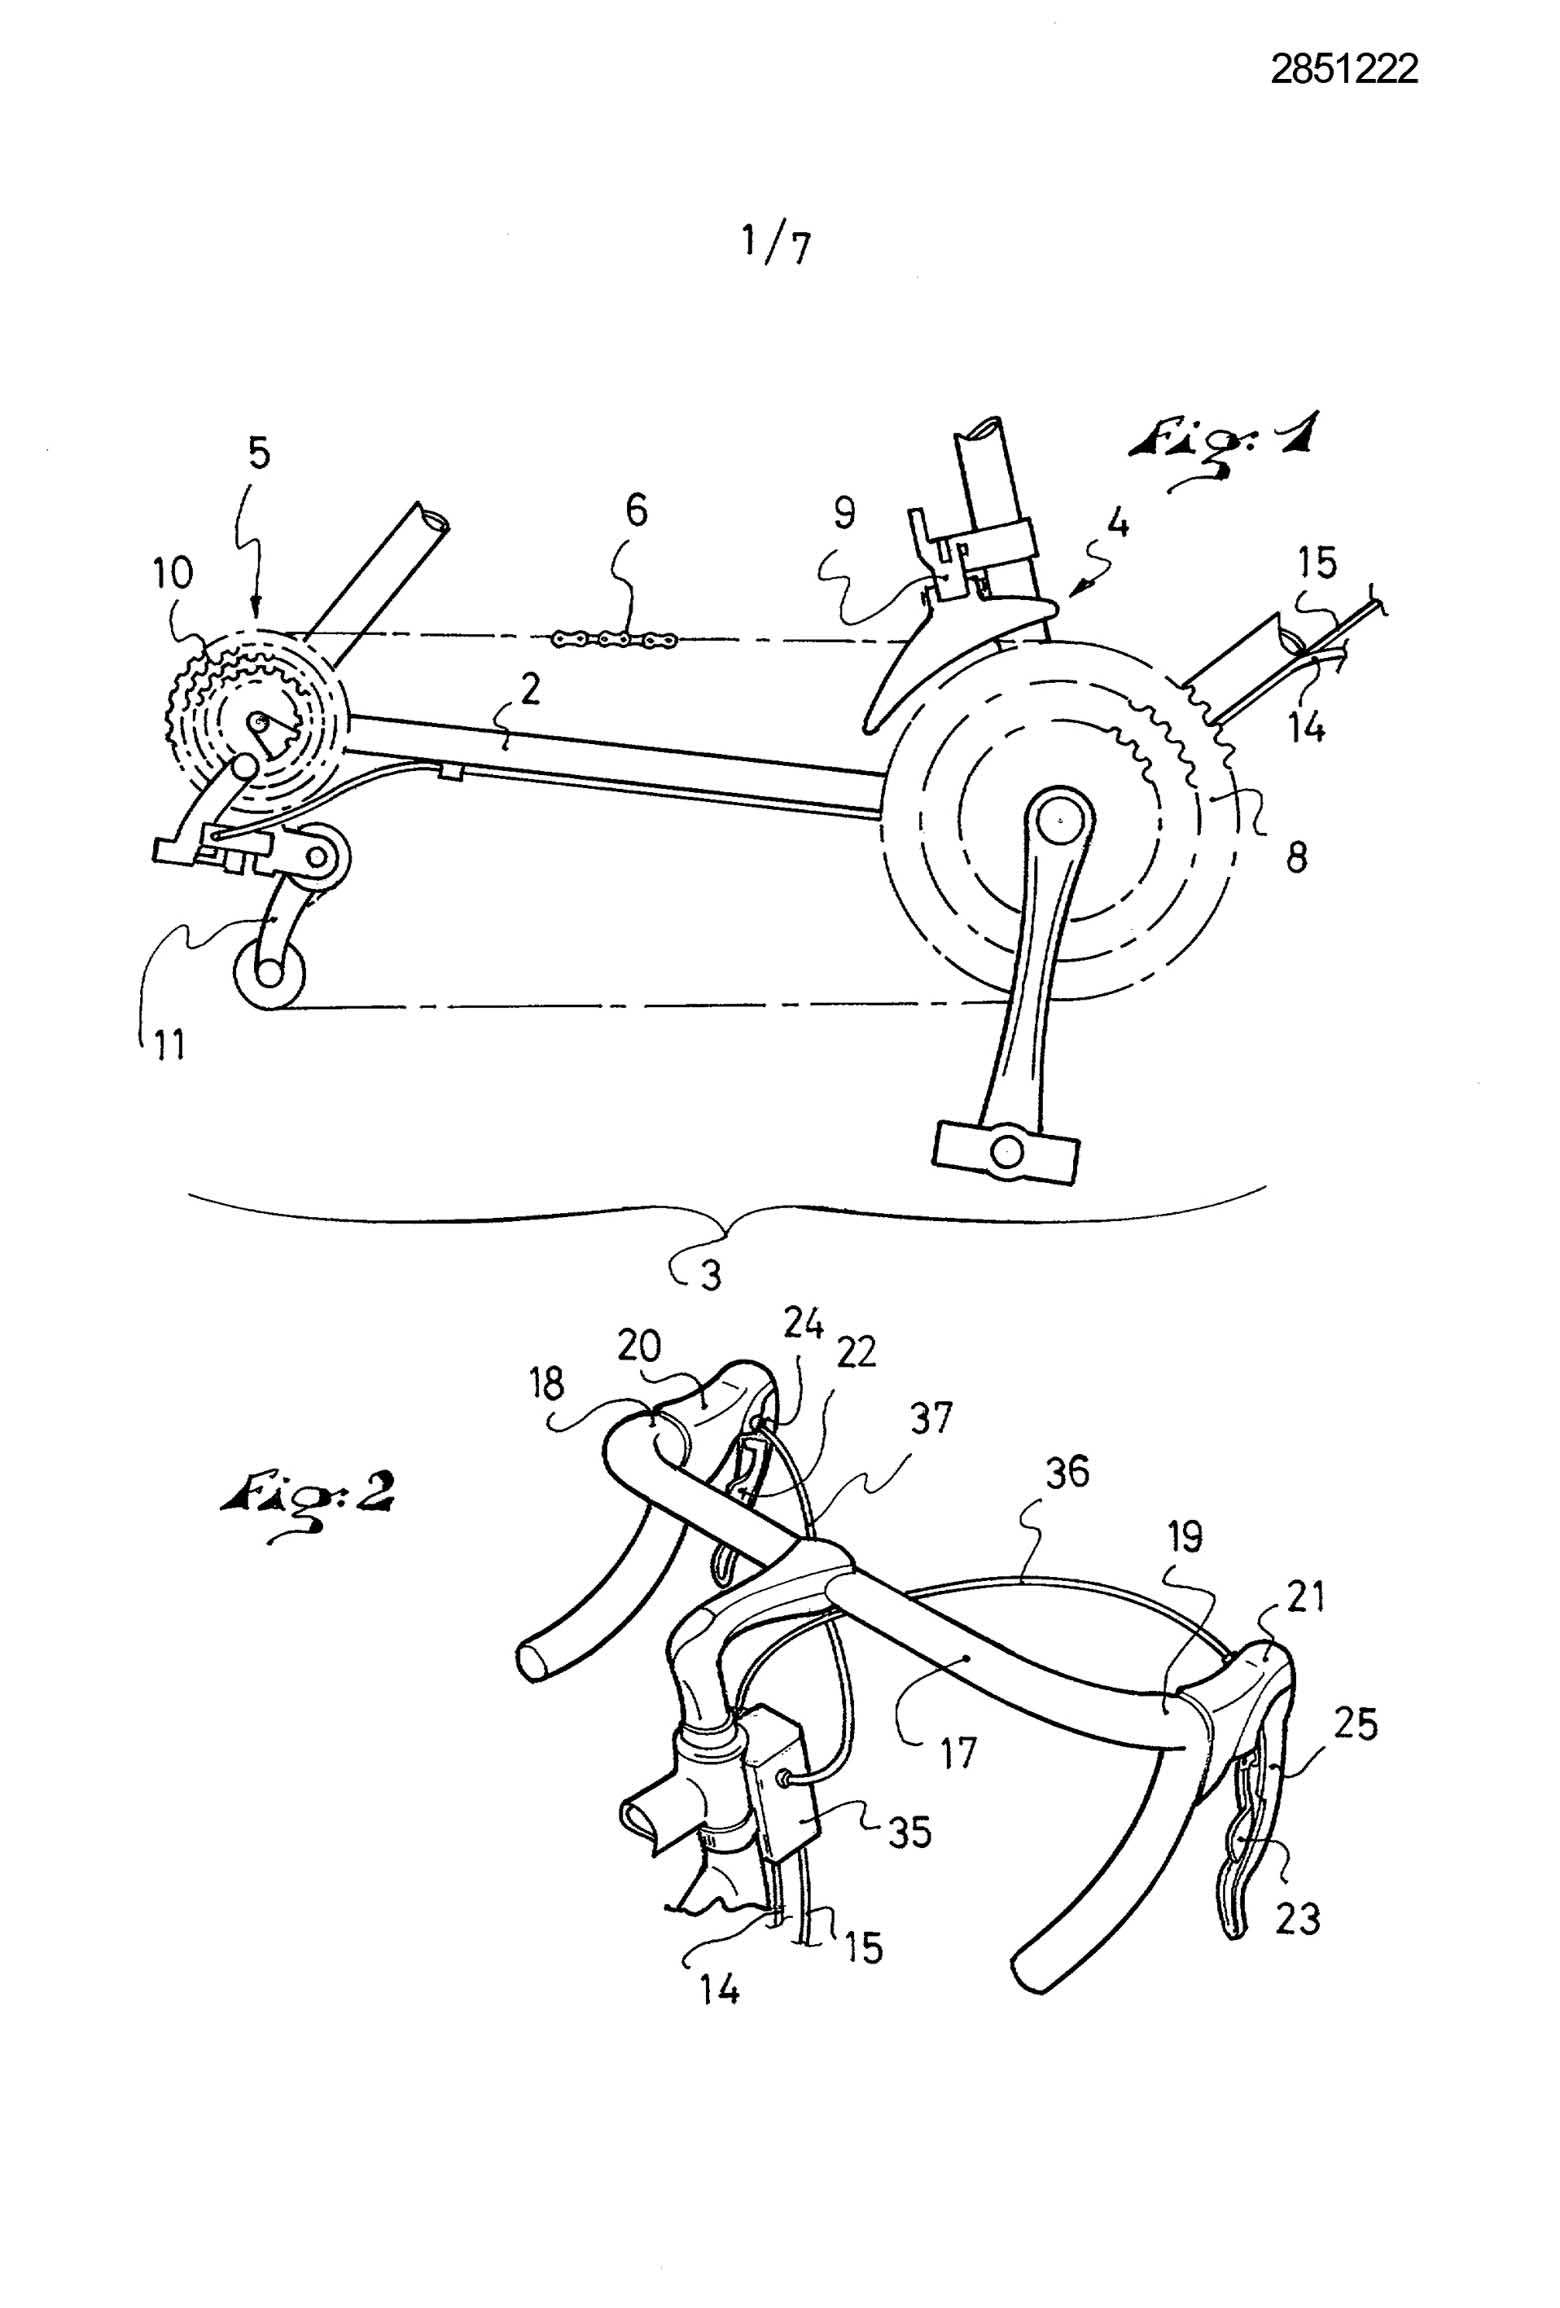 French Patent 2,851,222 - MAVIC scan 13 main image